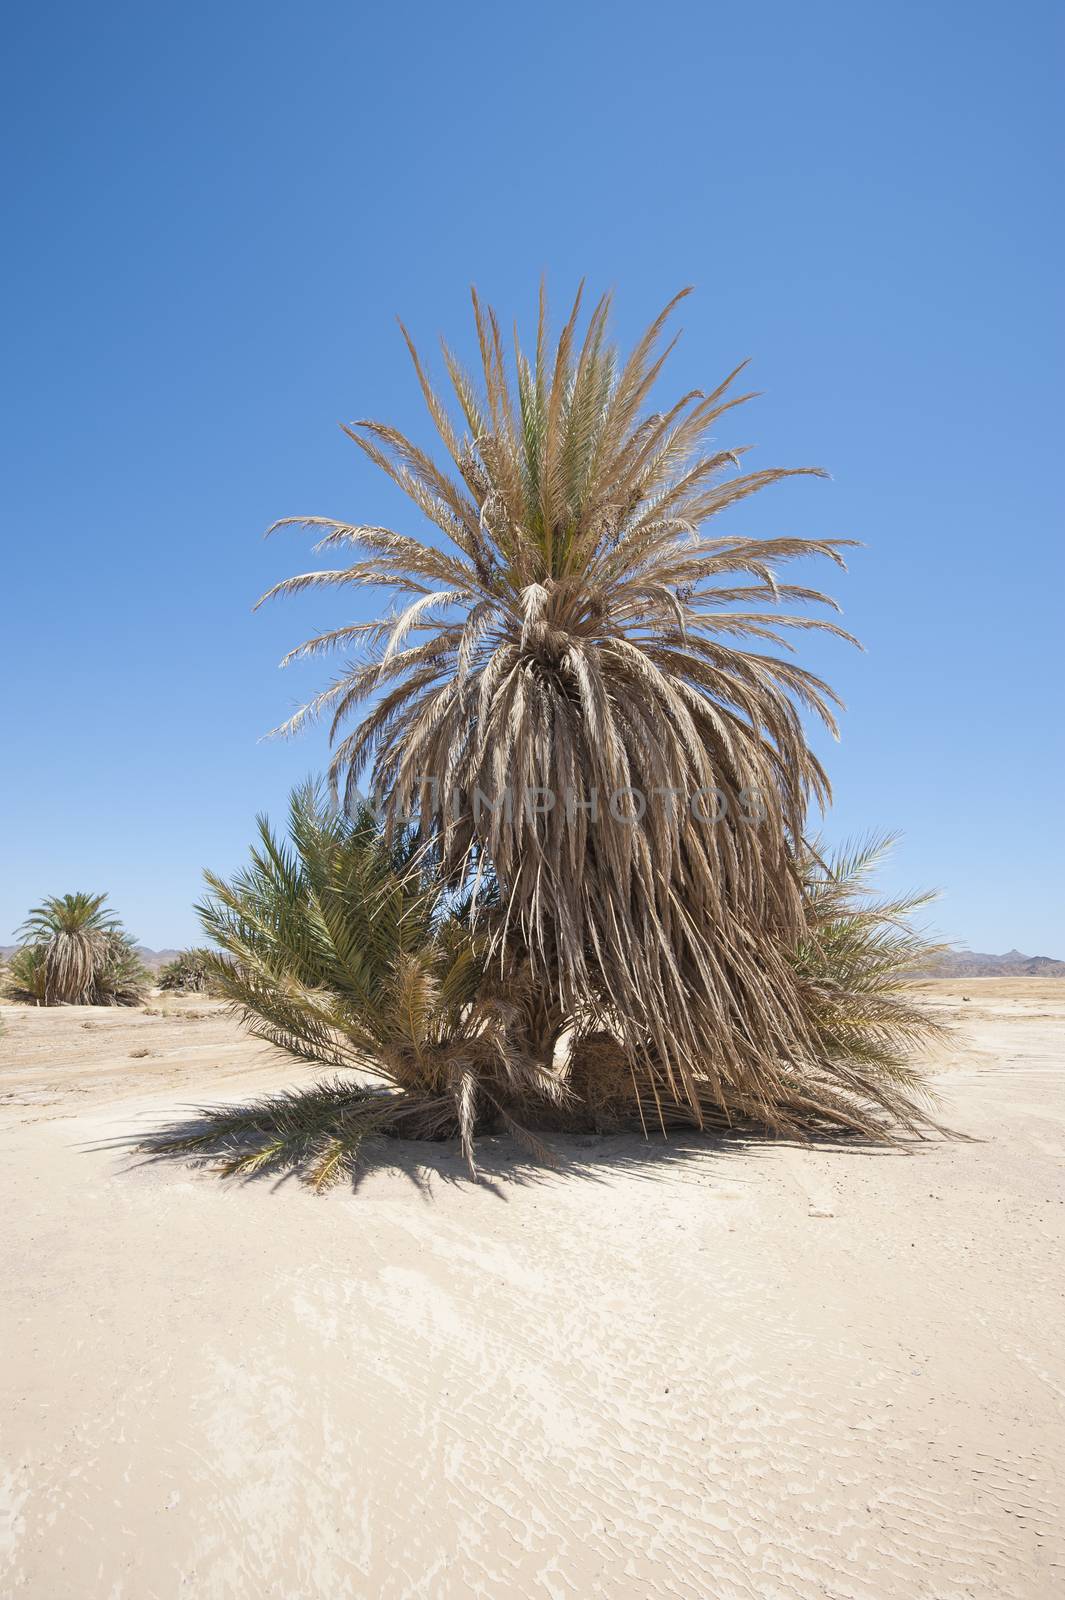 Large date palm tree Phoenix dactylifera in an isolated arid desert landscape